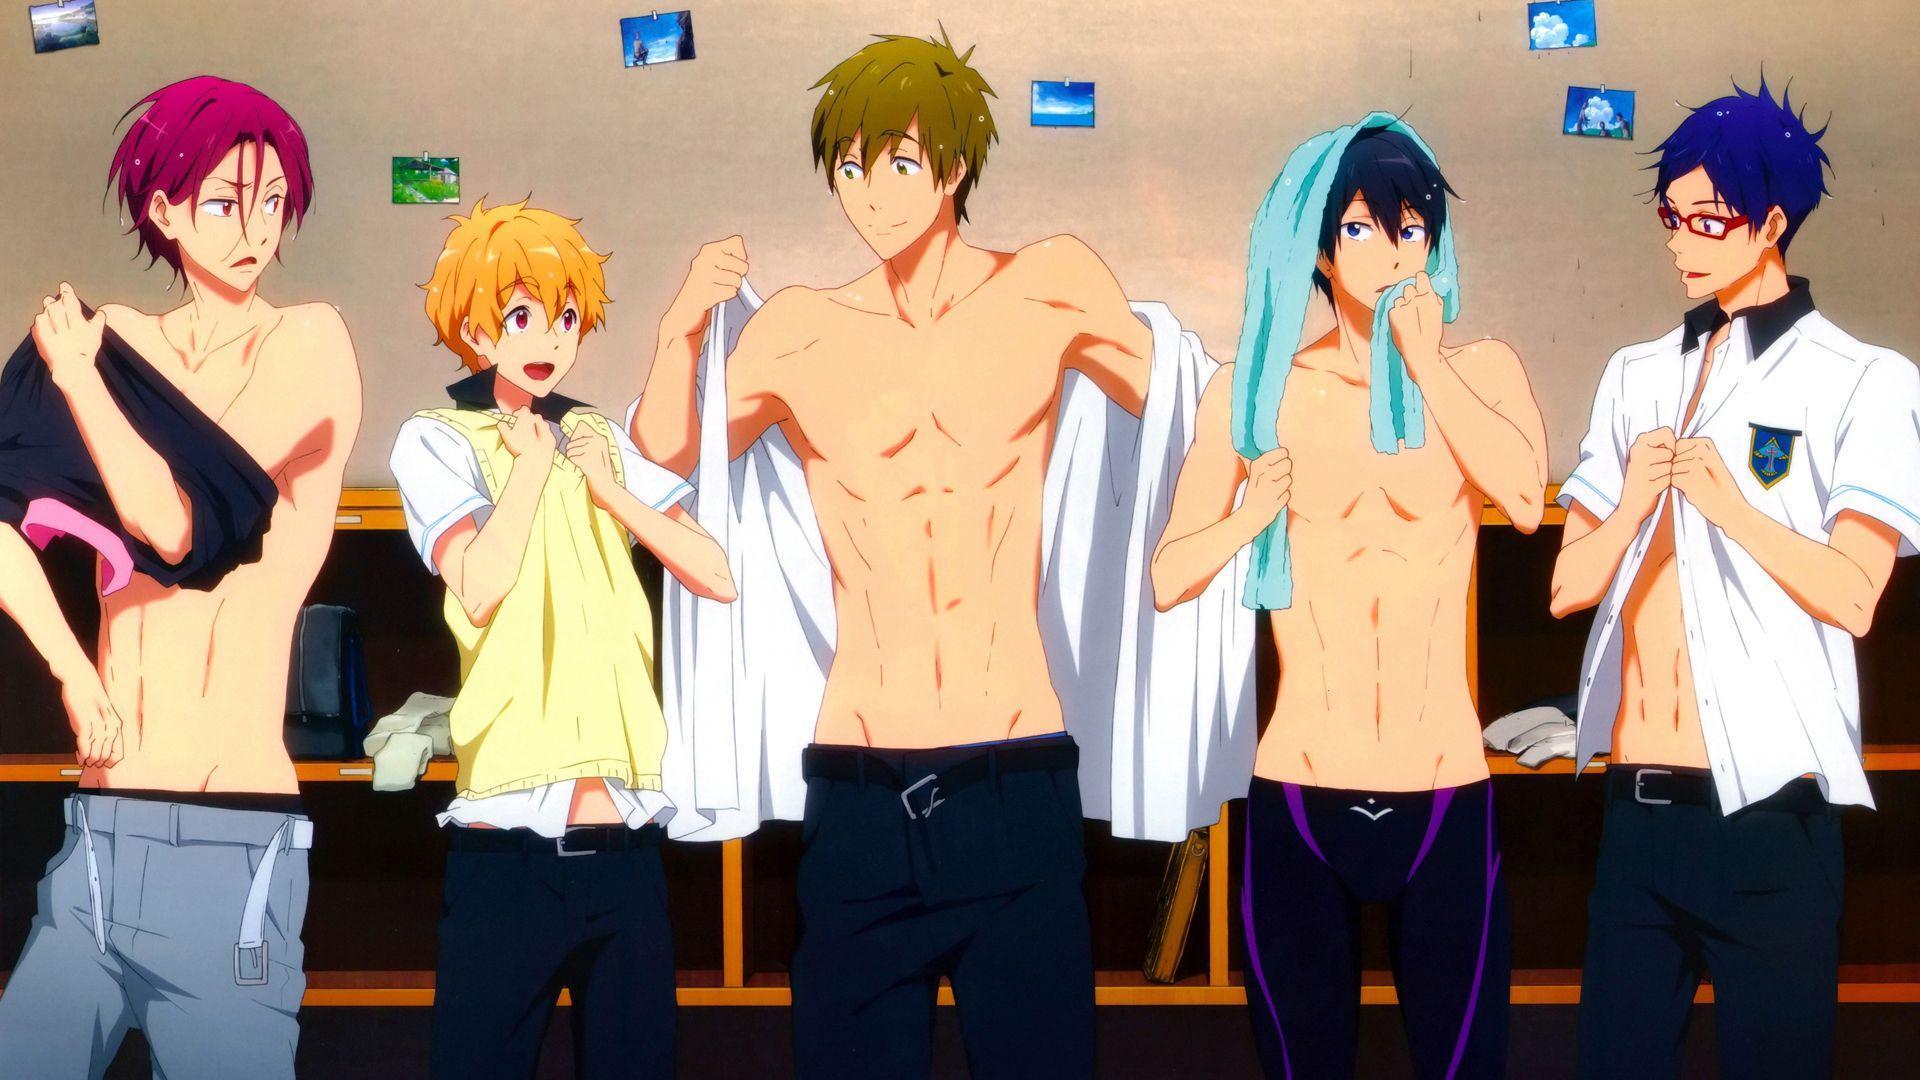 Free Iwatobi Swim Club Wallpaper HD. It's an Anime Thing